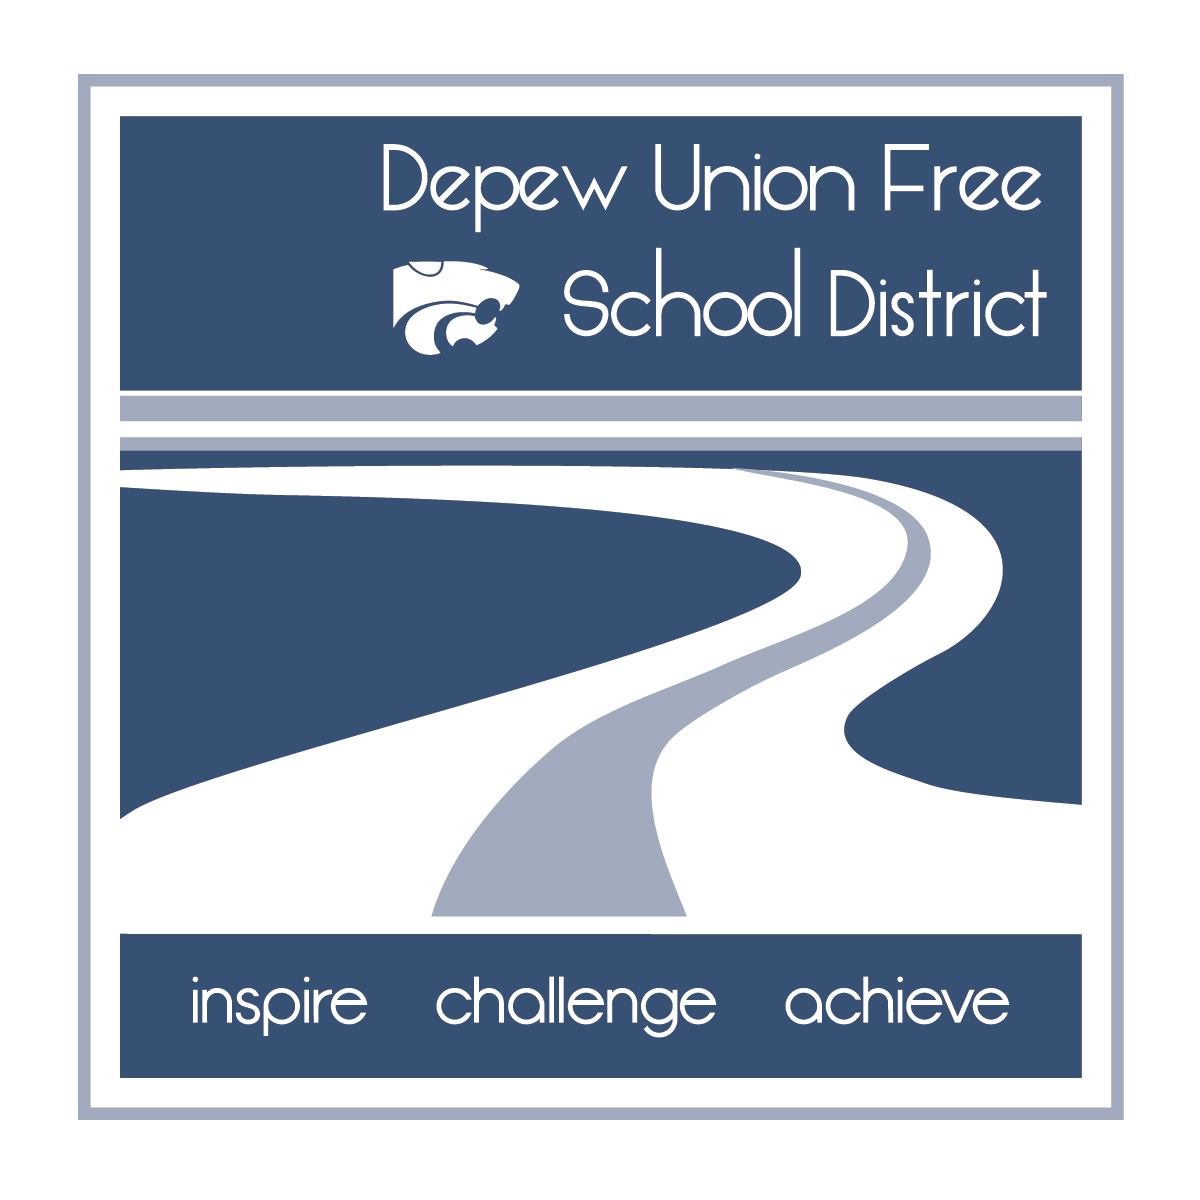 Depew Union Free School District